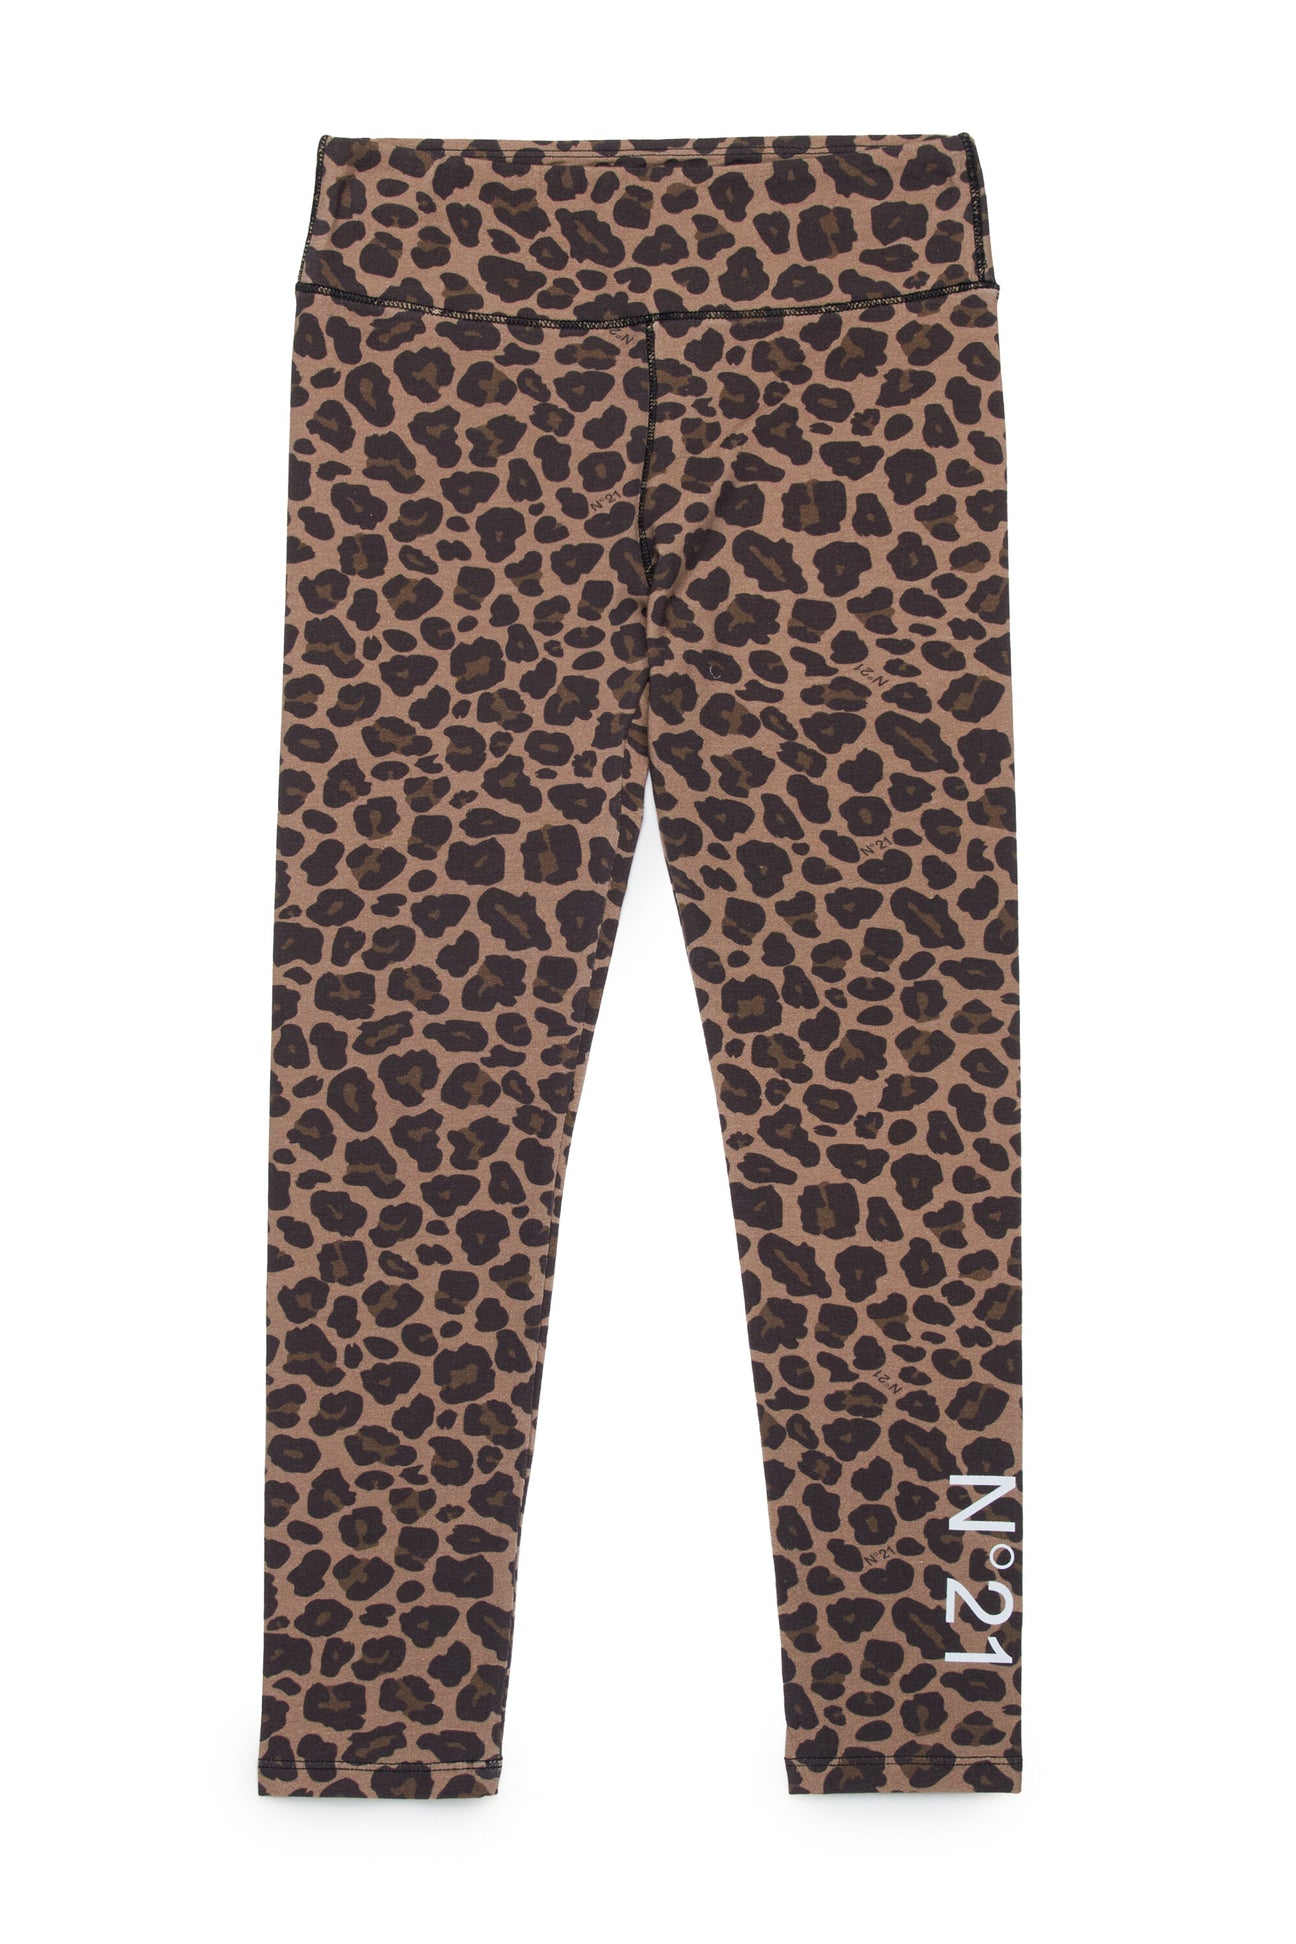 Pantaloni leggings leopardati 